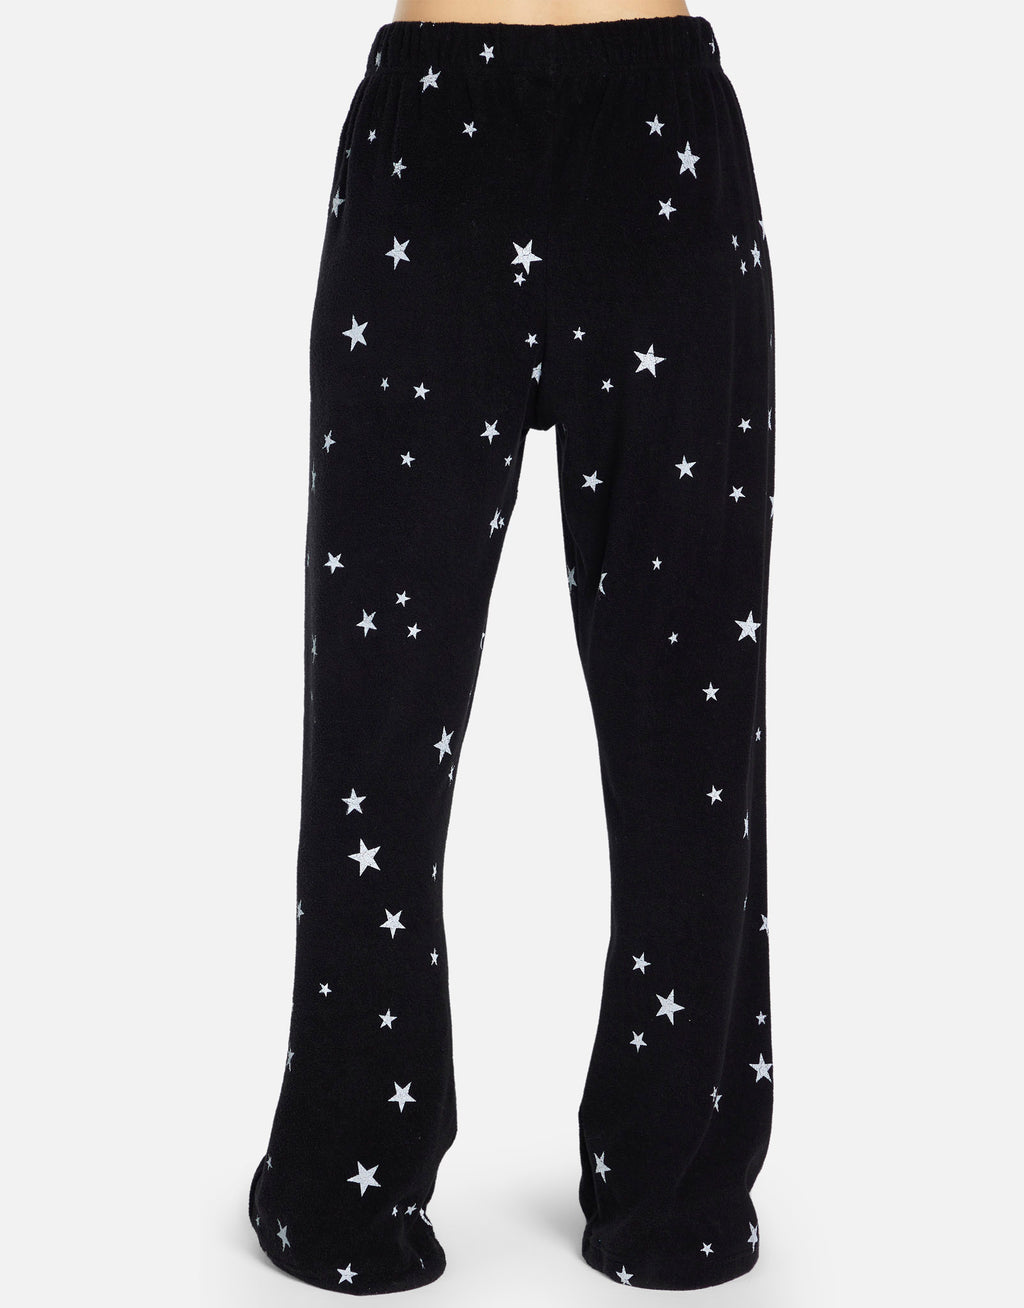 Michael Kors Tweed Leggings Black & White Pants - Ruby Lane